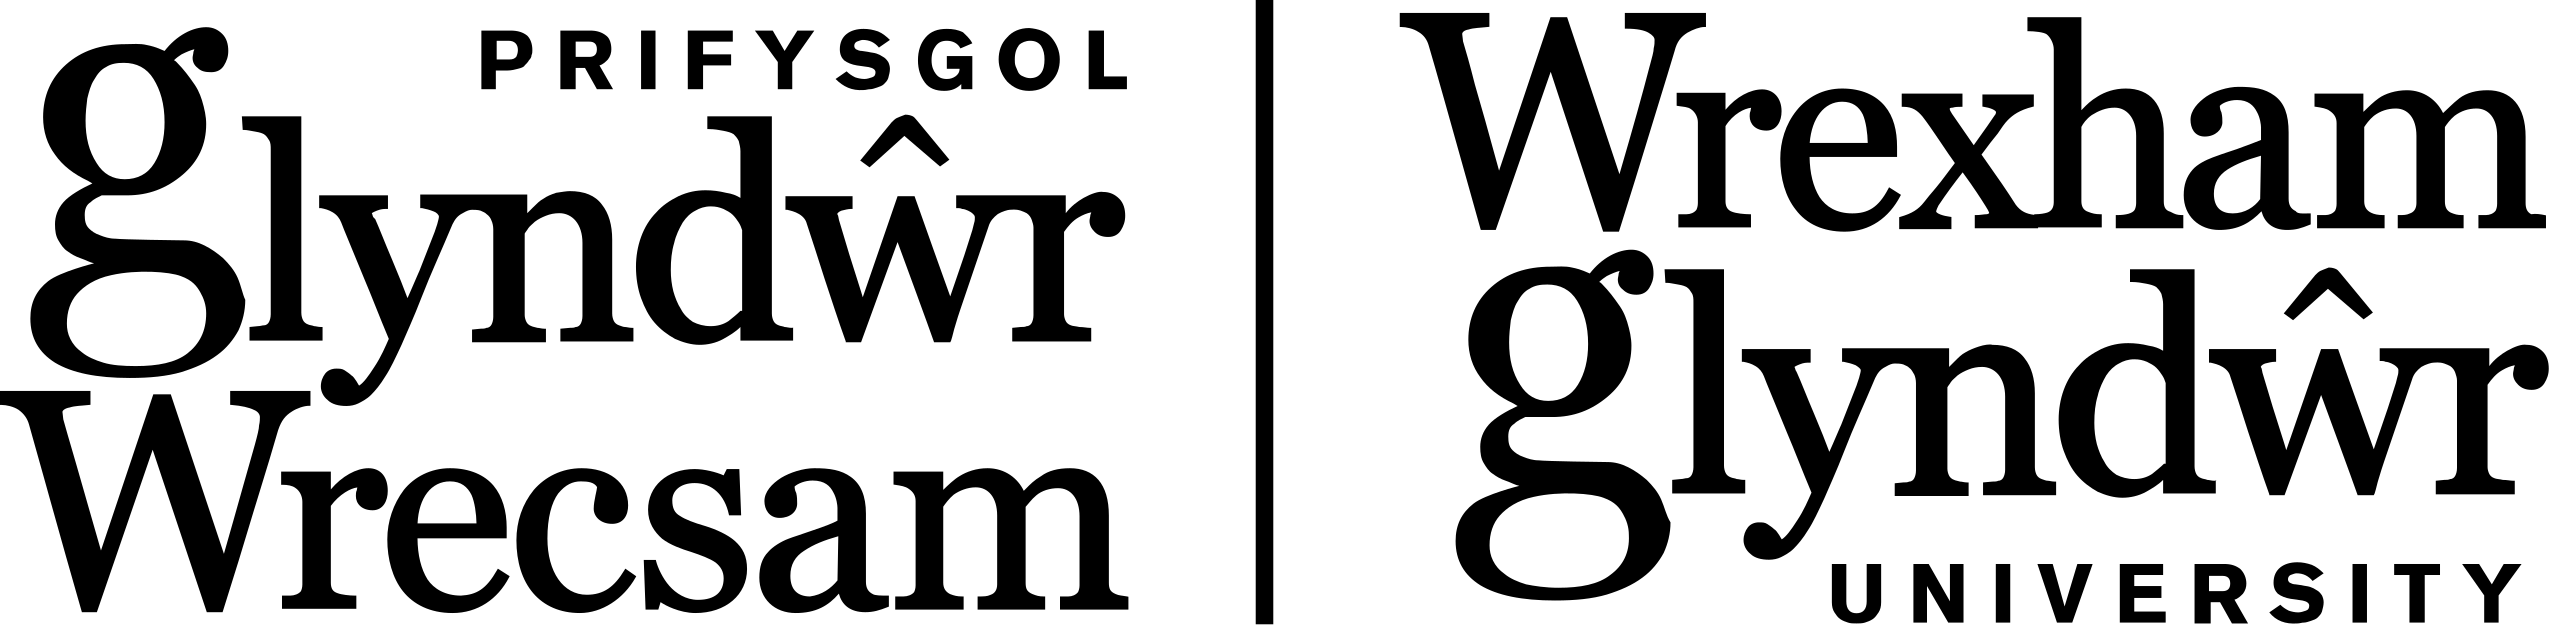 Wrexham Glyndwr black and white logo